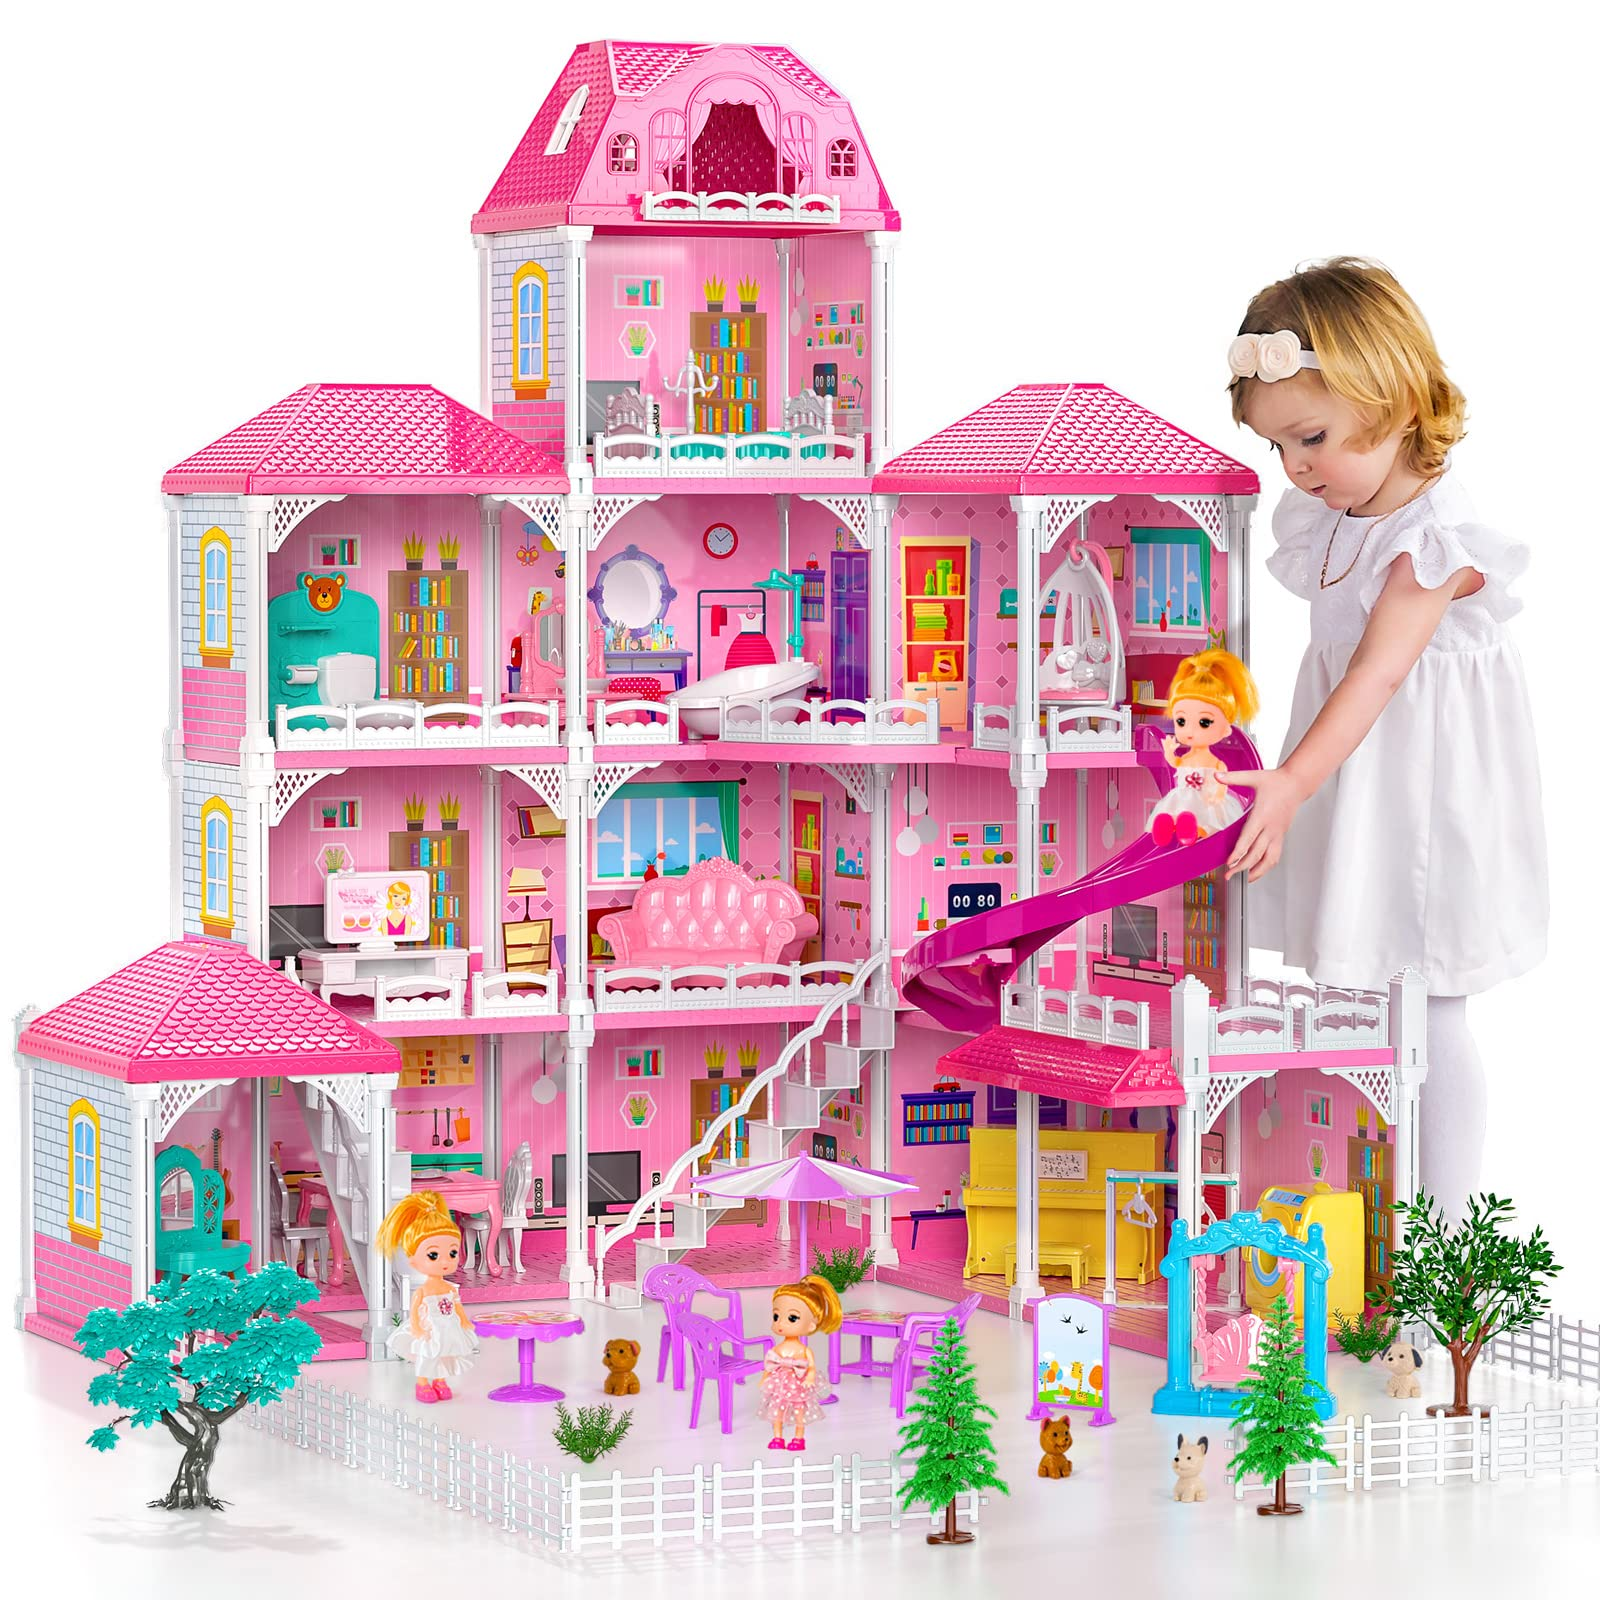 Dream House Doll House 7-8 for Girls - 4-Story 12 Comoros